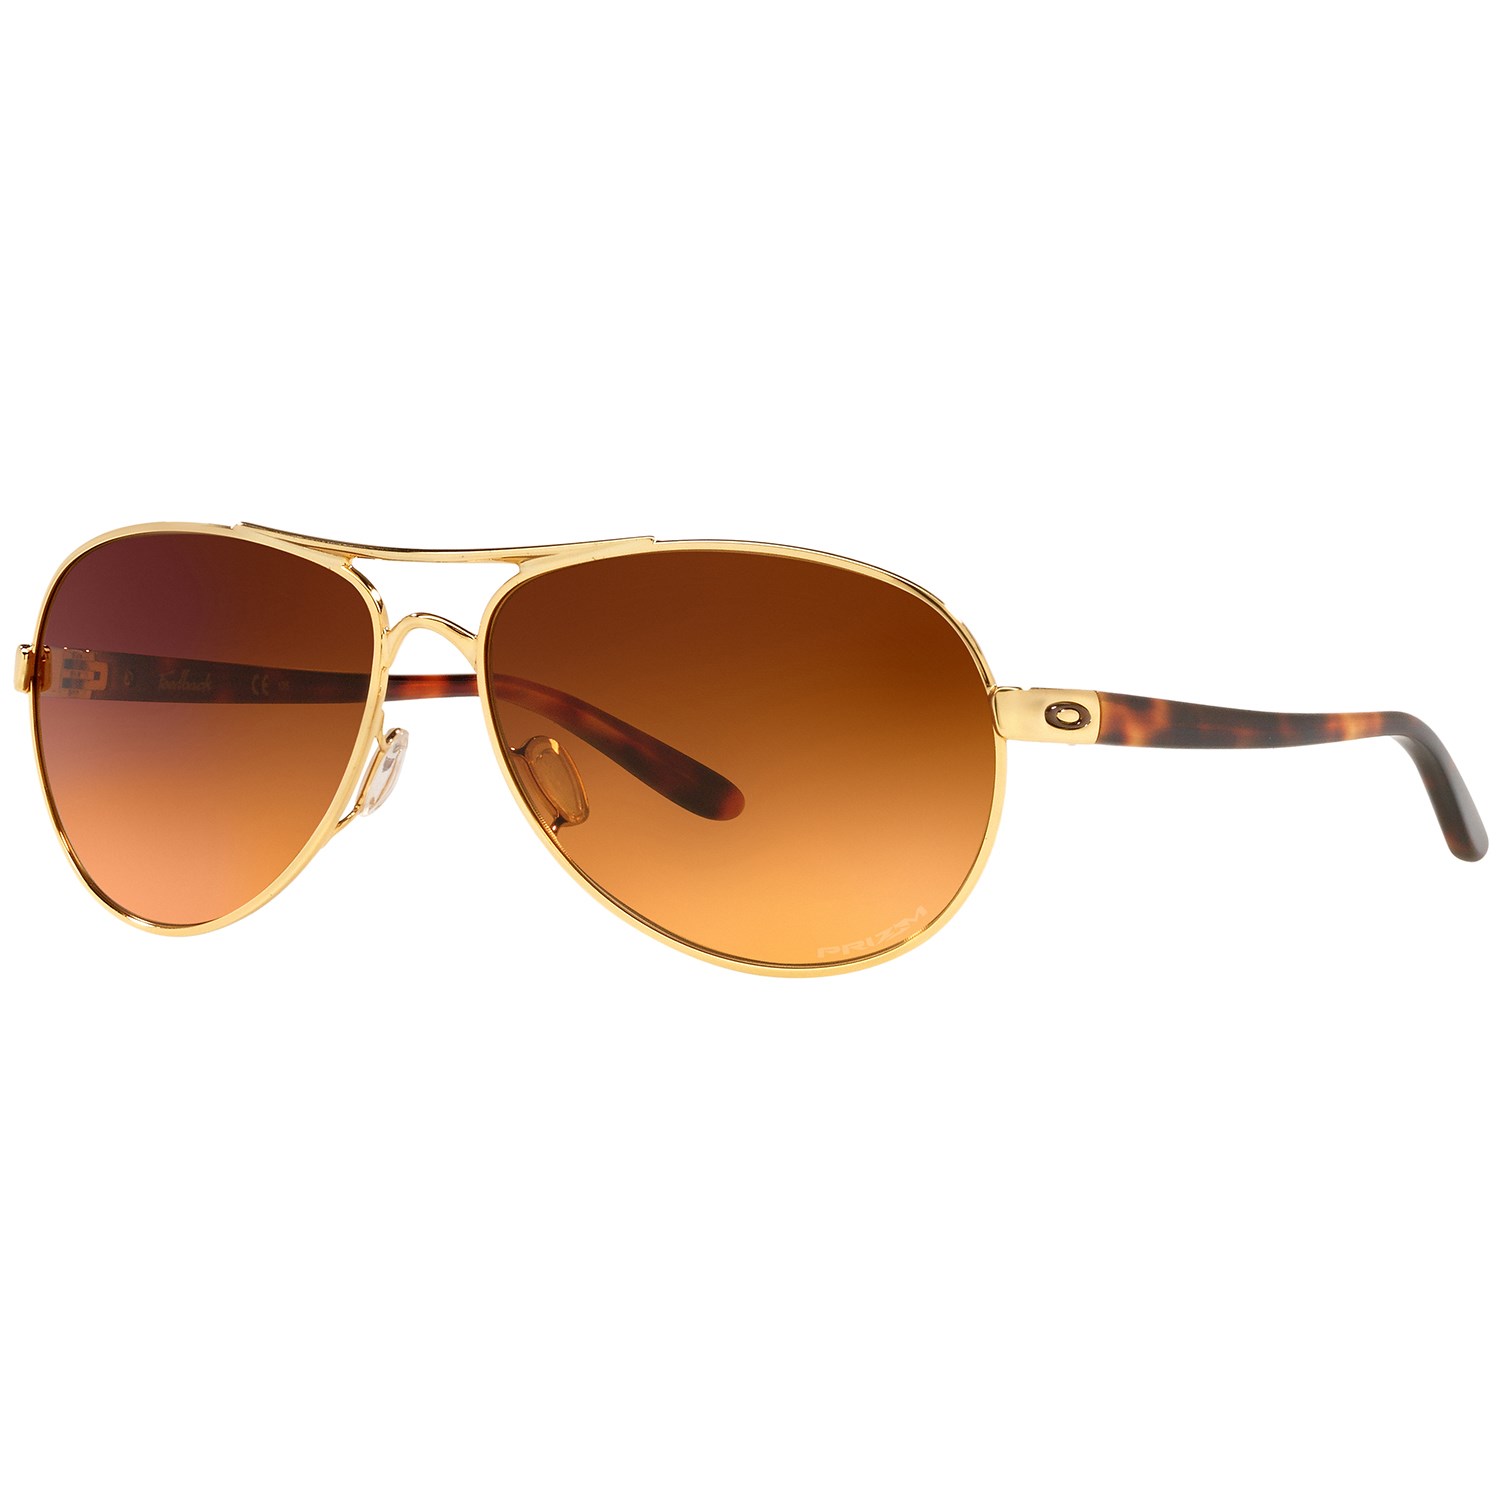 Солнцезащитные очки Oakley Feedback — женские, polished gold